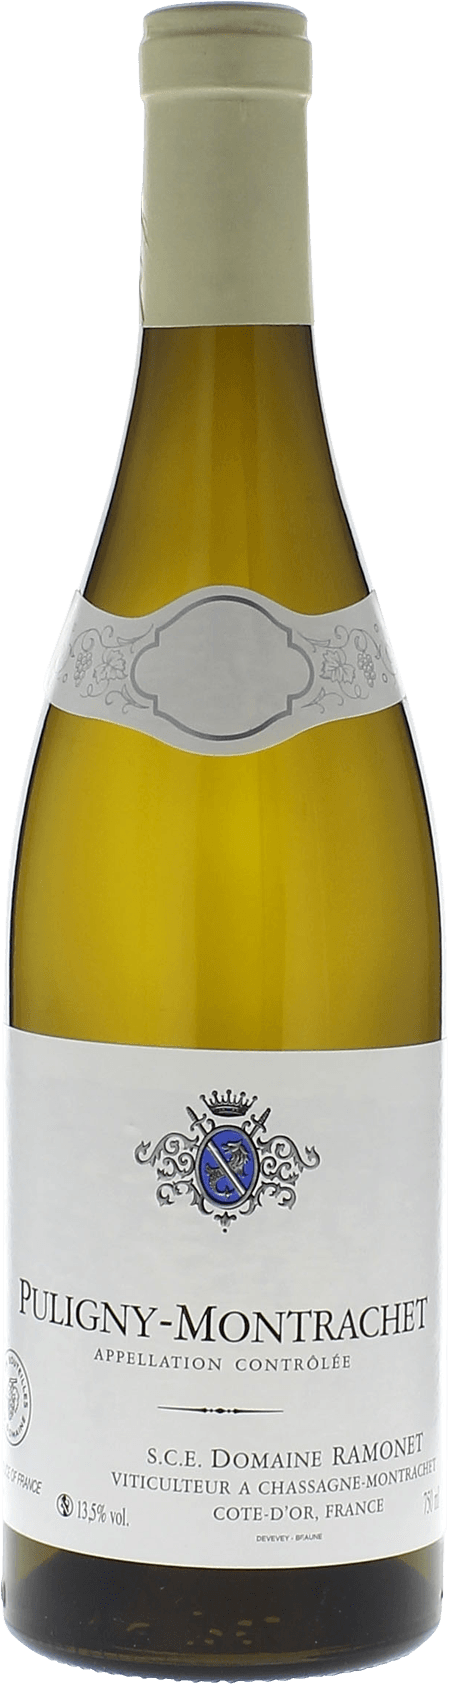 Puligny montrachet 2017 Domaine RAMONET, Bourgogne blanc